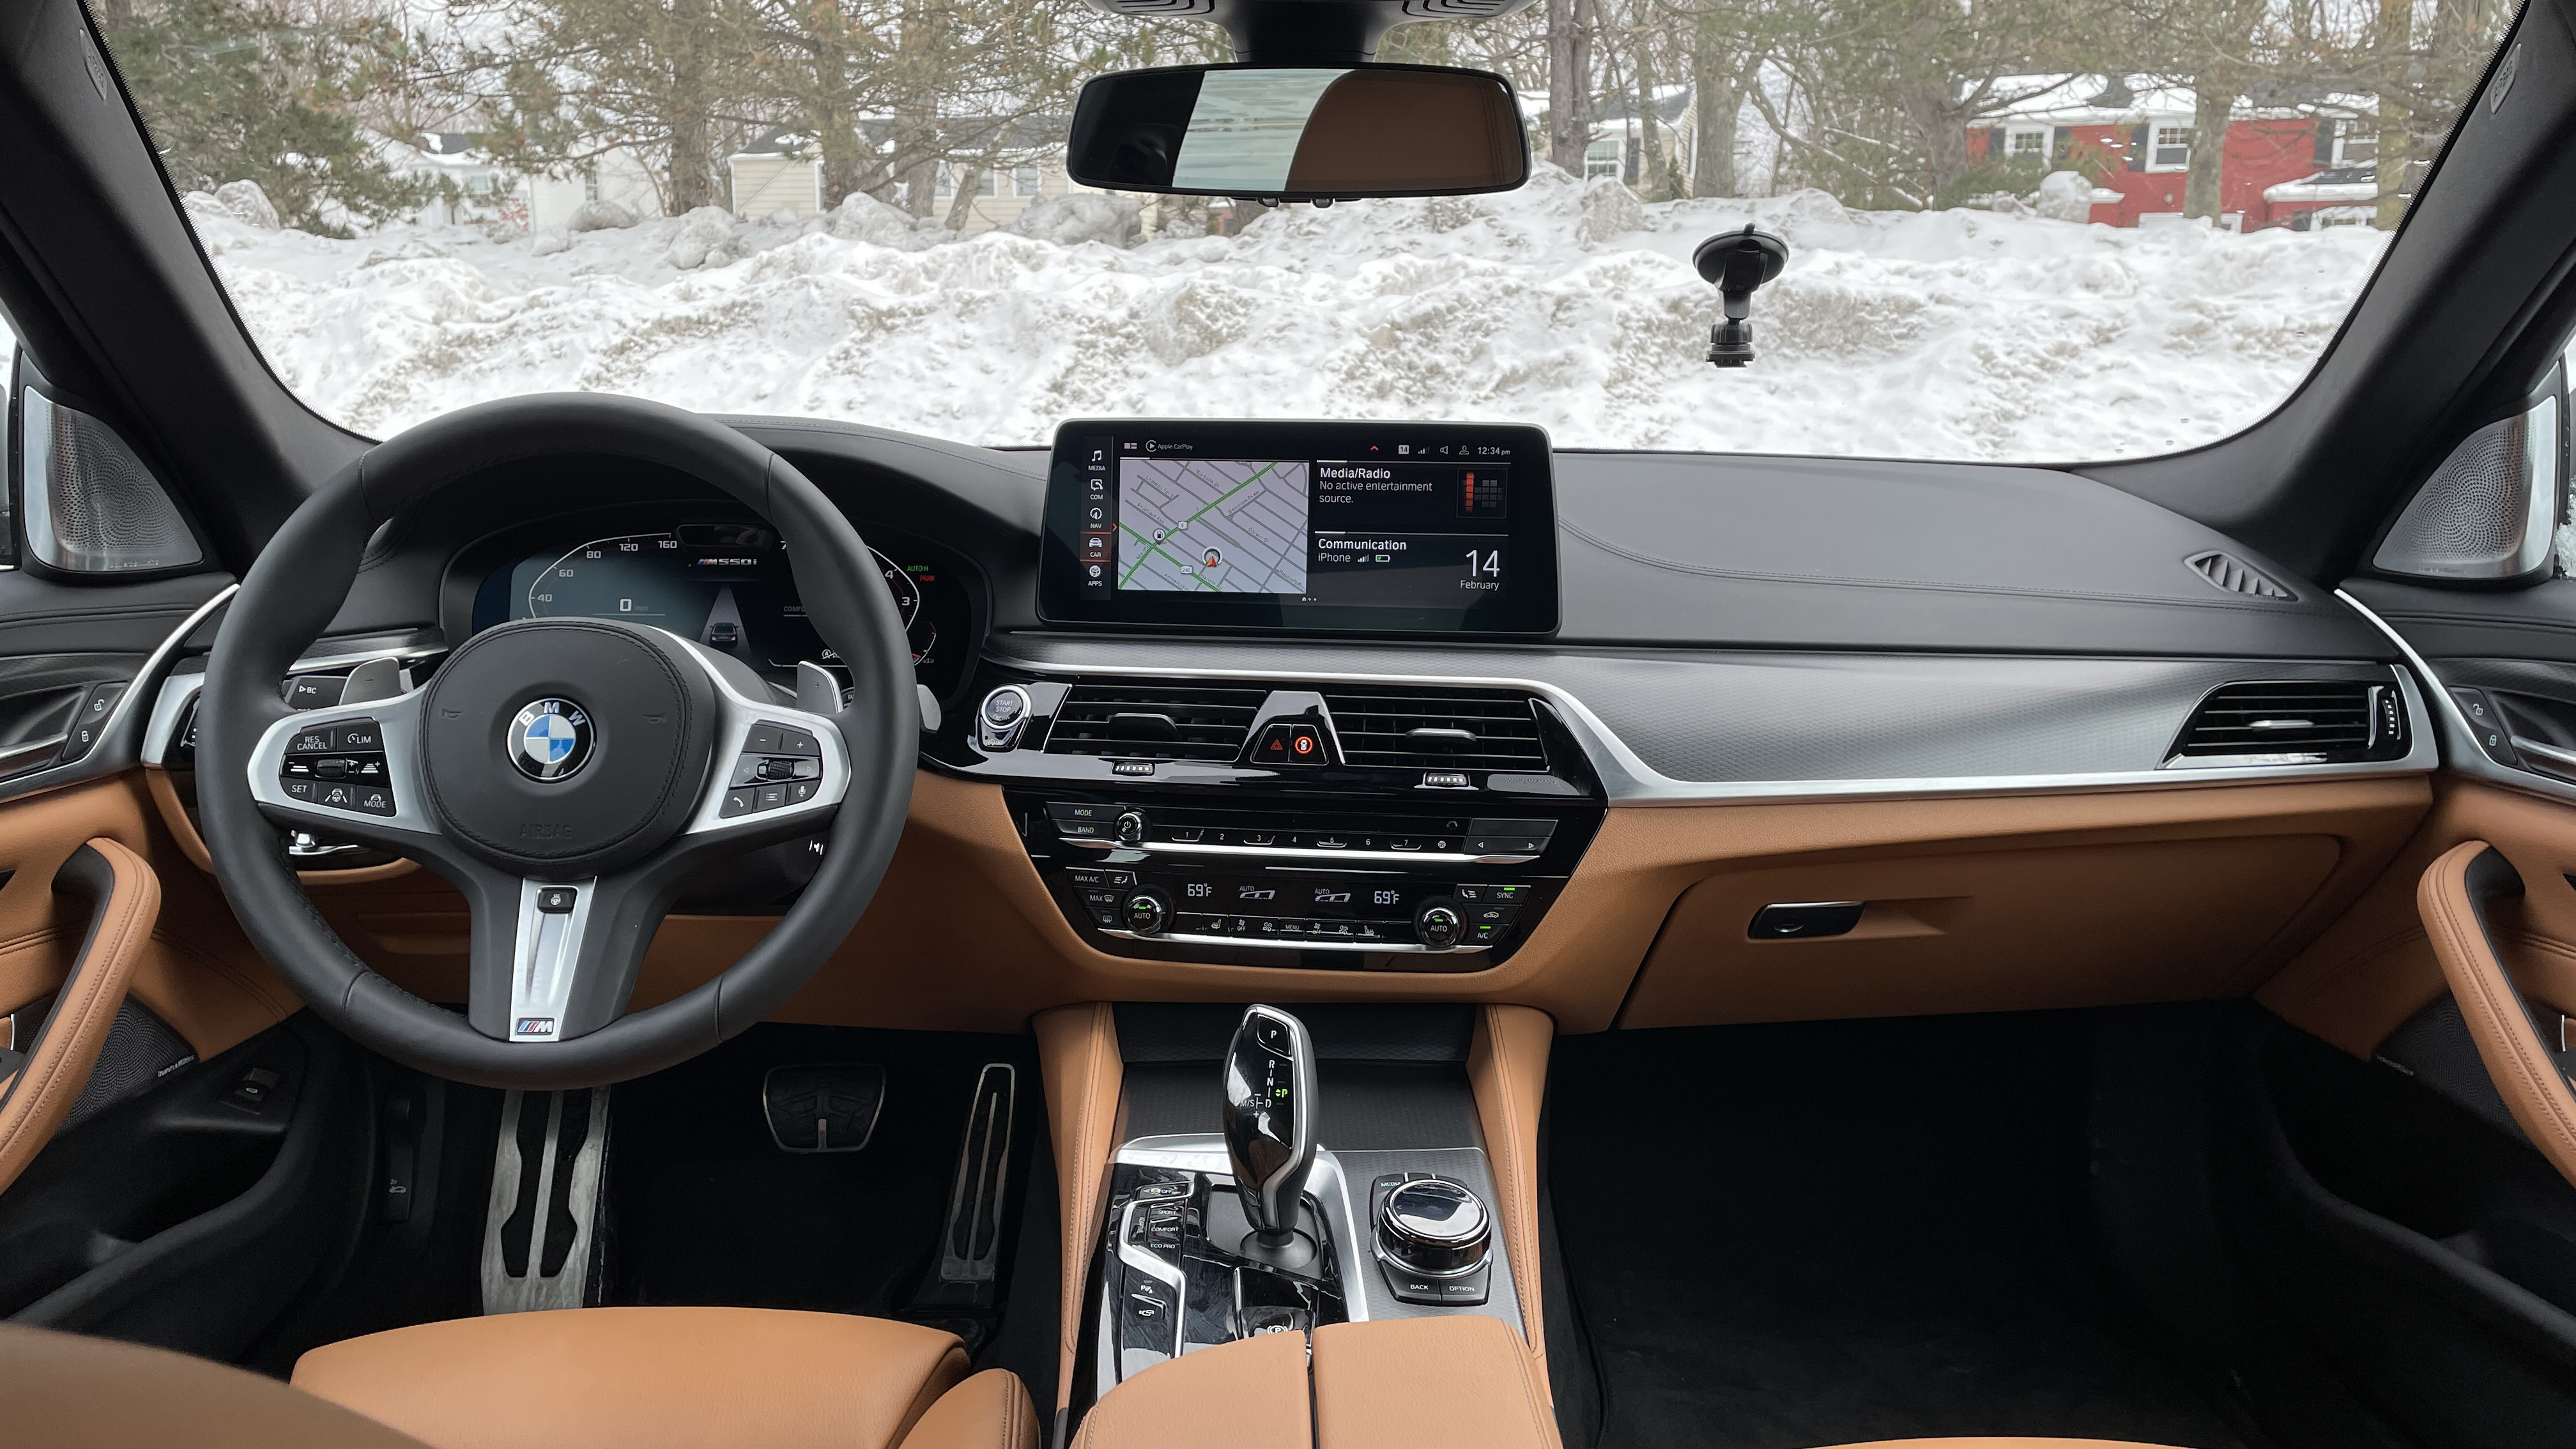 BMW M550i interior - Cockpit